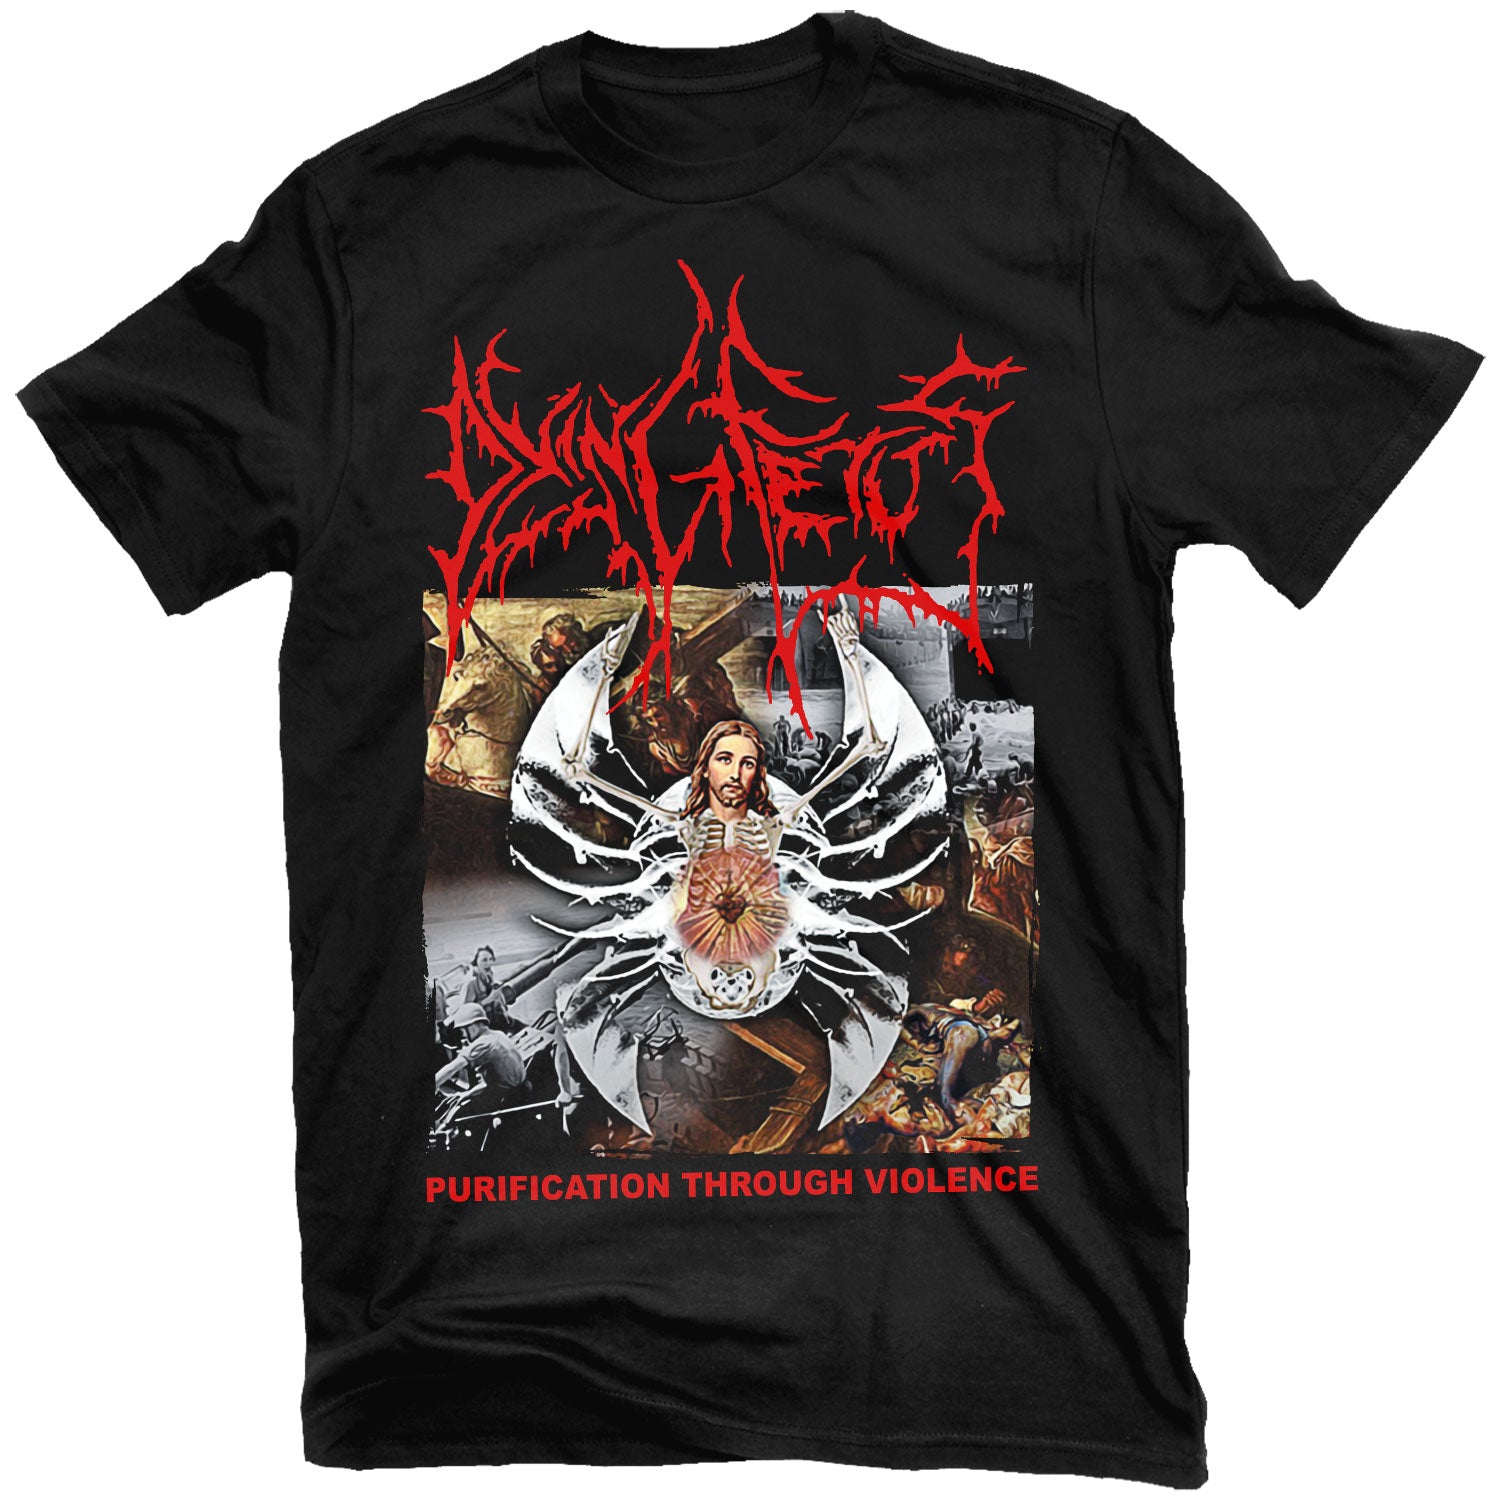 Dying Fetus "Purification Through Violence" T-Shirt